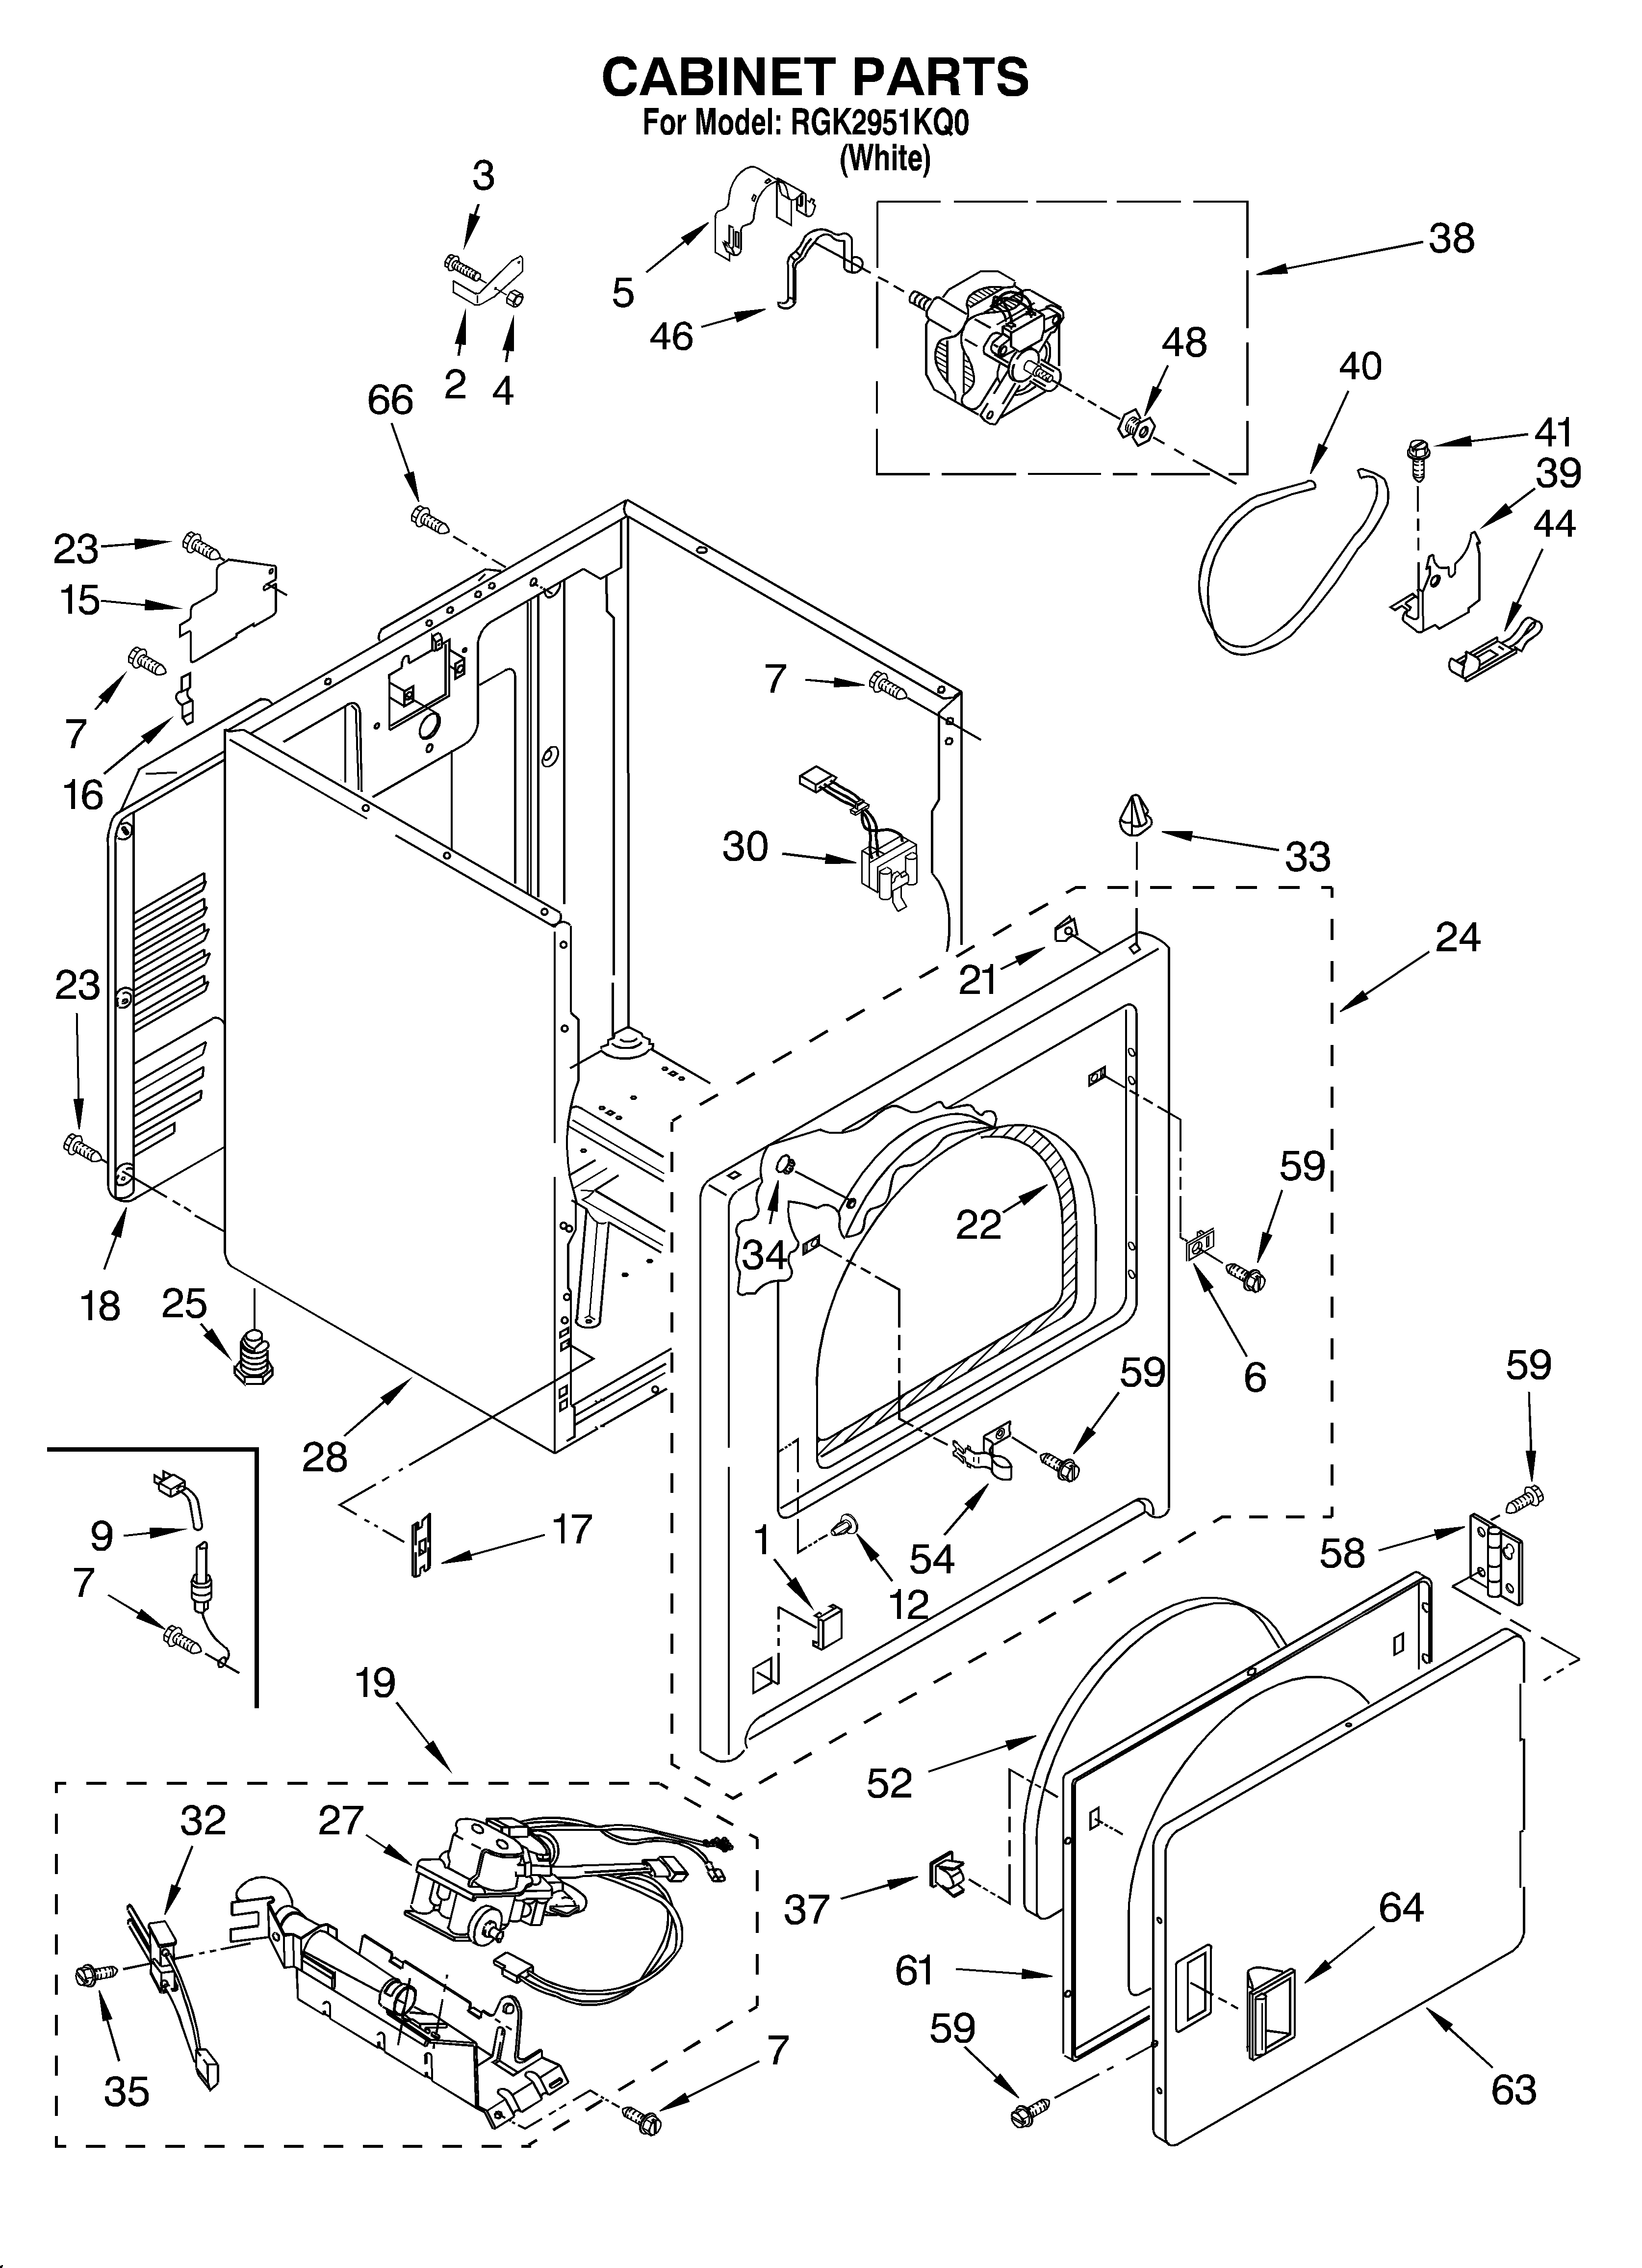 Cabinet Diagram  U0026 Parts List For Model Rgk2951kq0 Roper